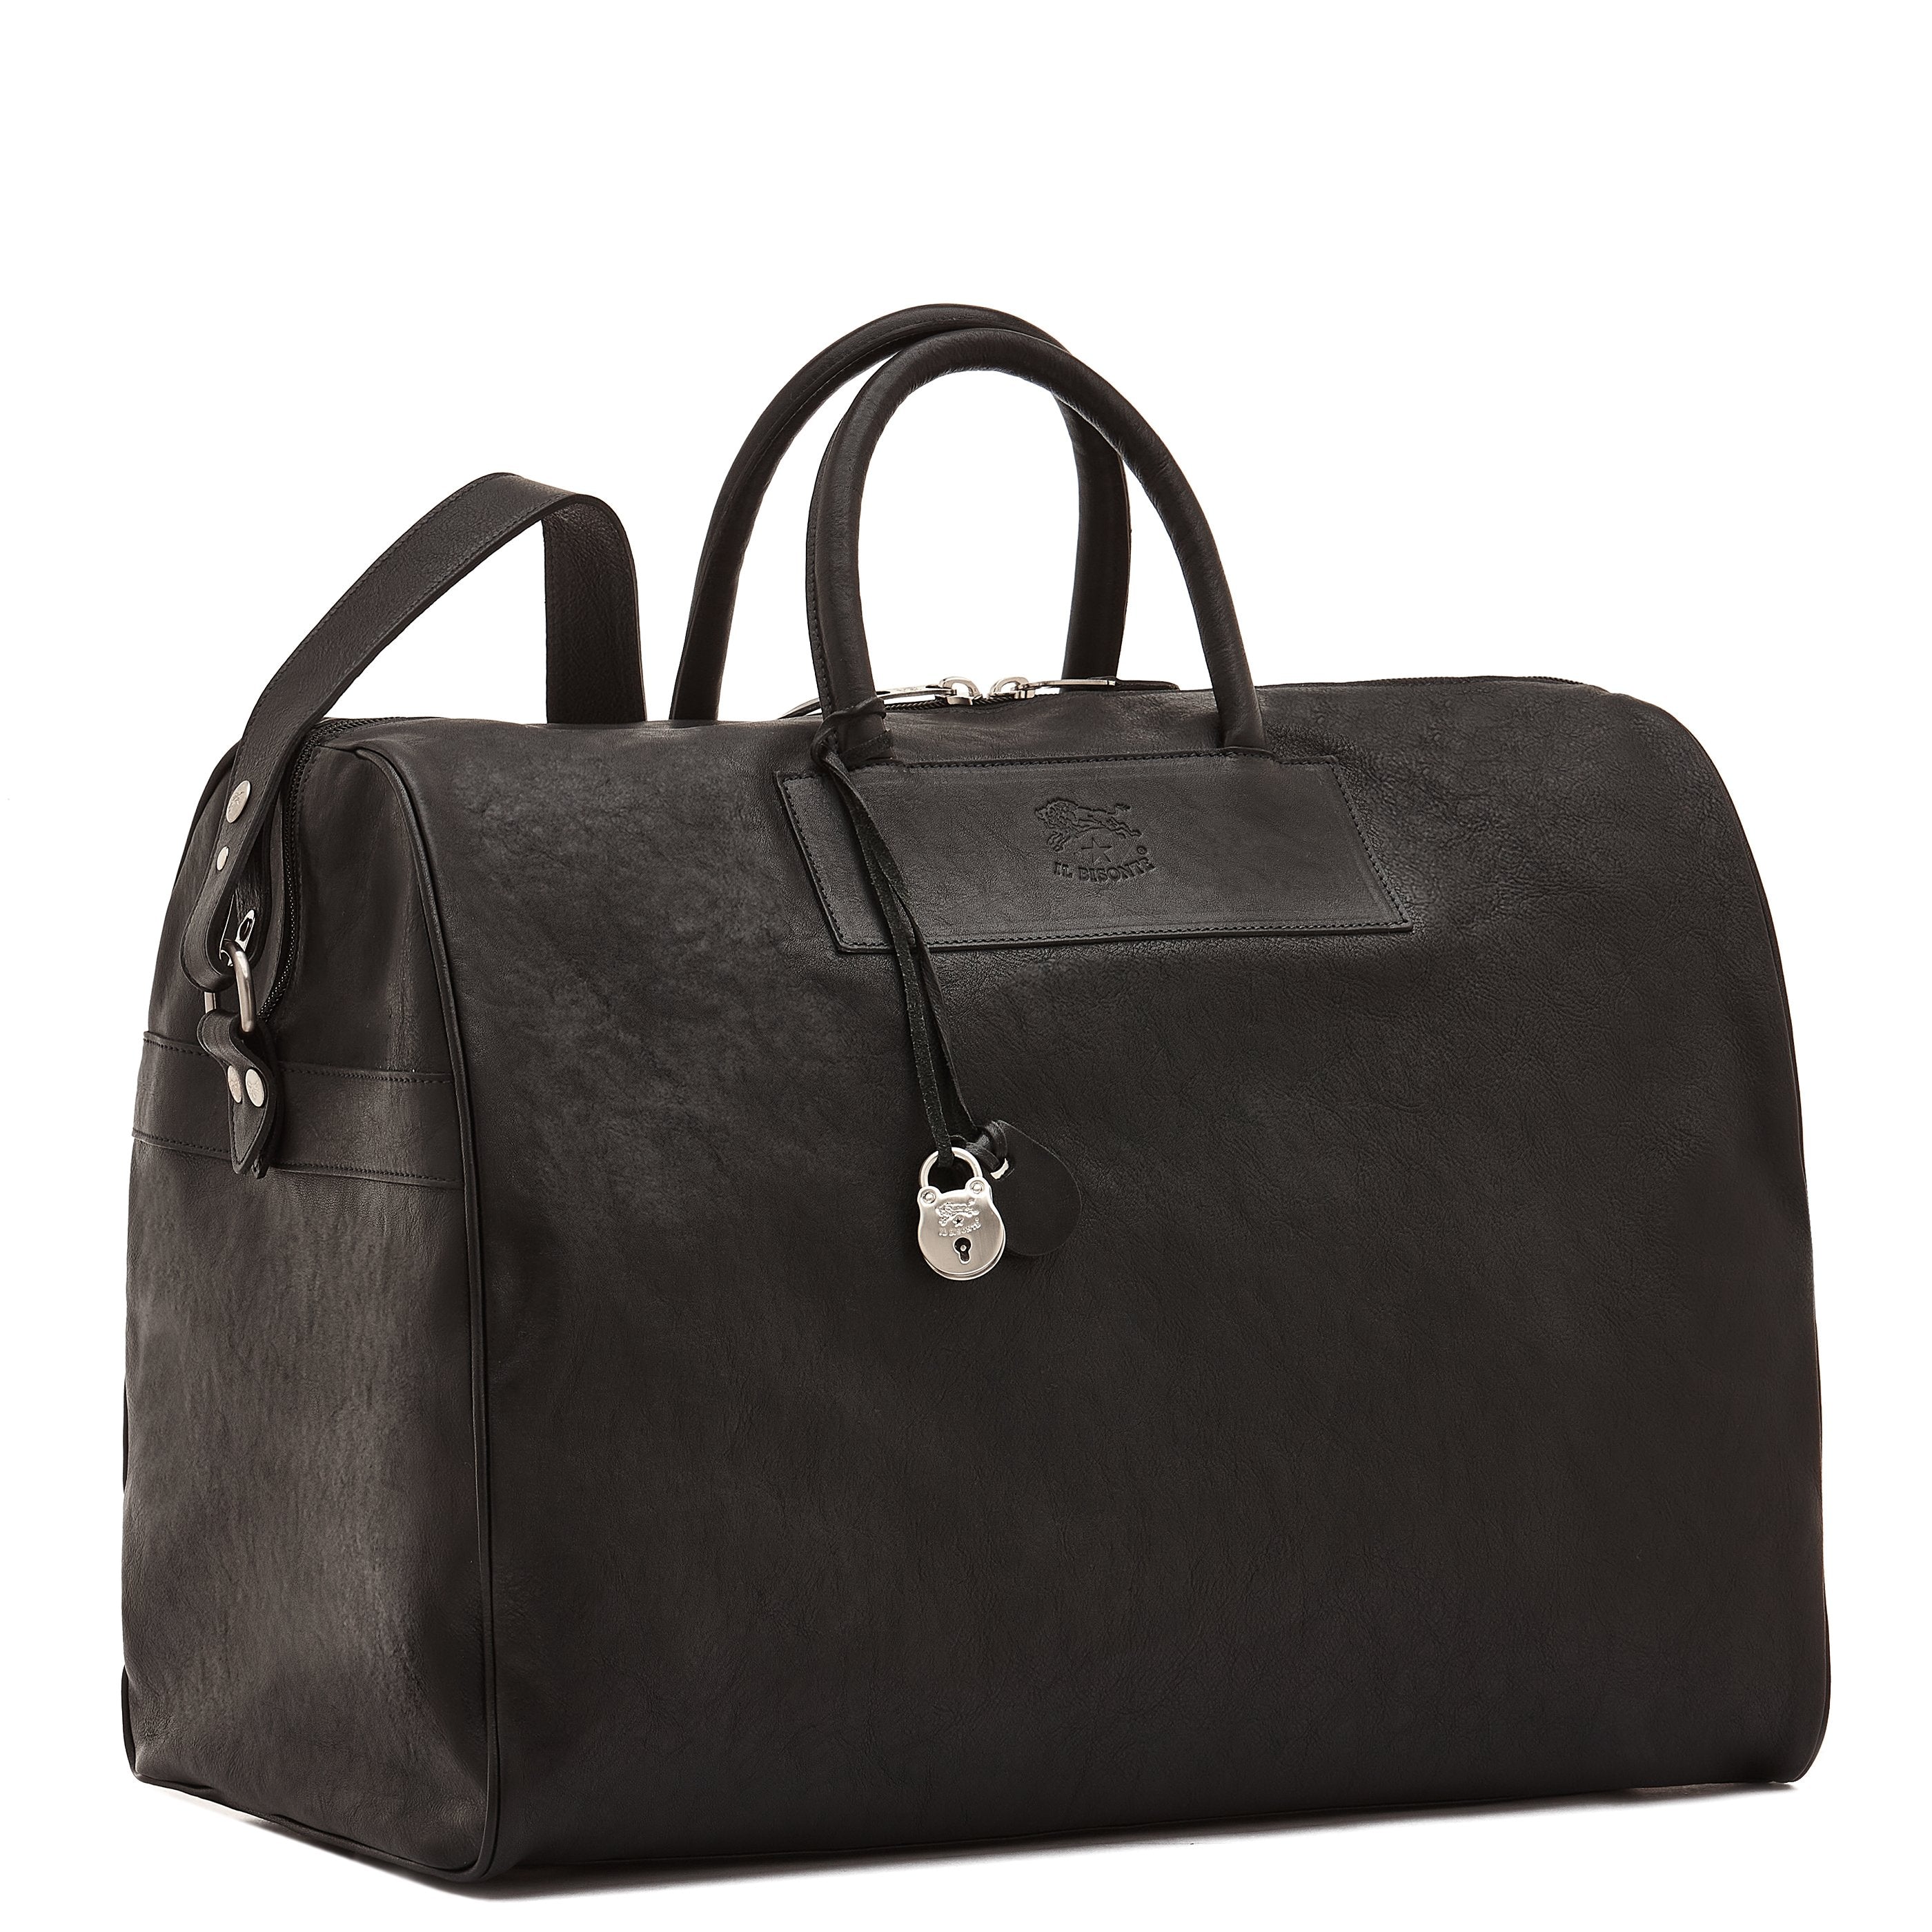 Lorenzo | Travel Bag in Vintage Leather color Black